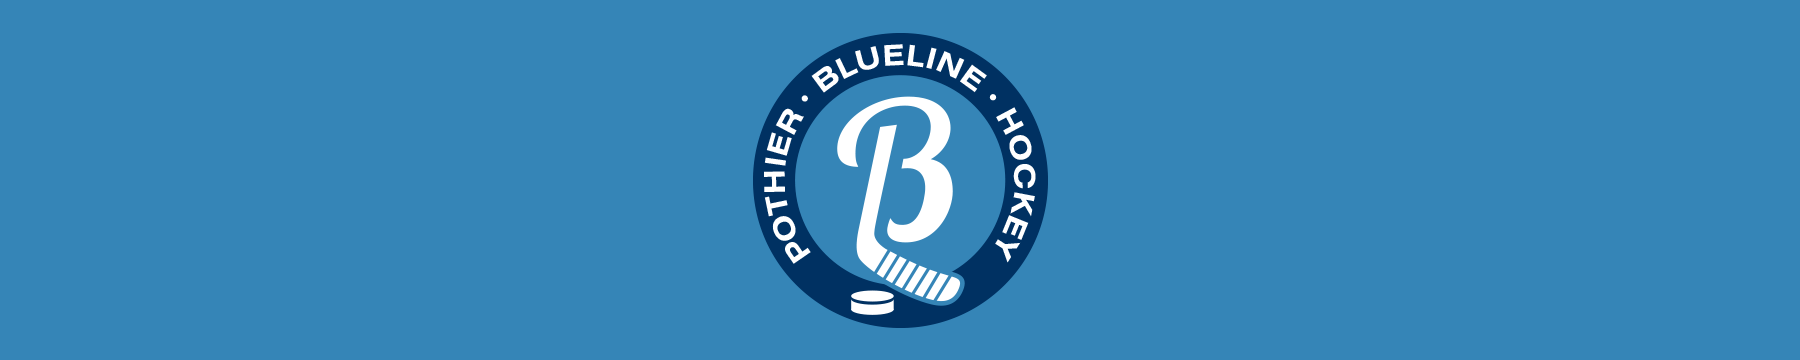 Pothier Blueline Hockey